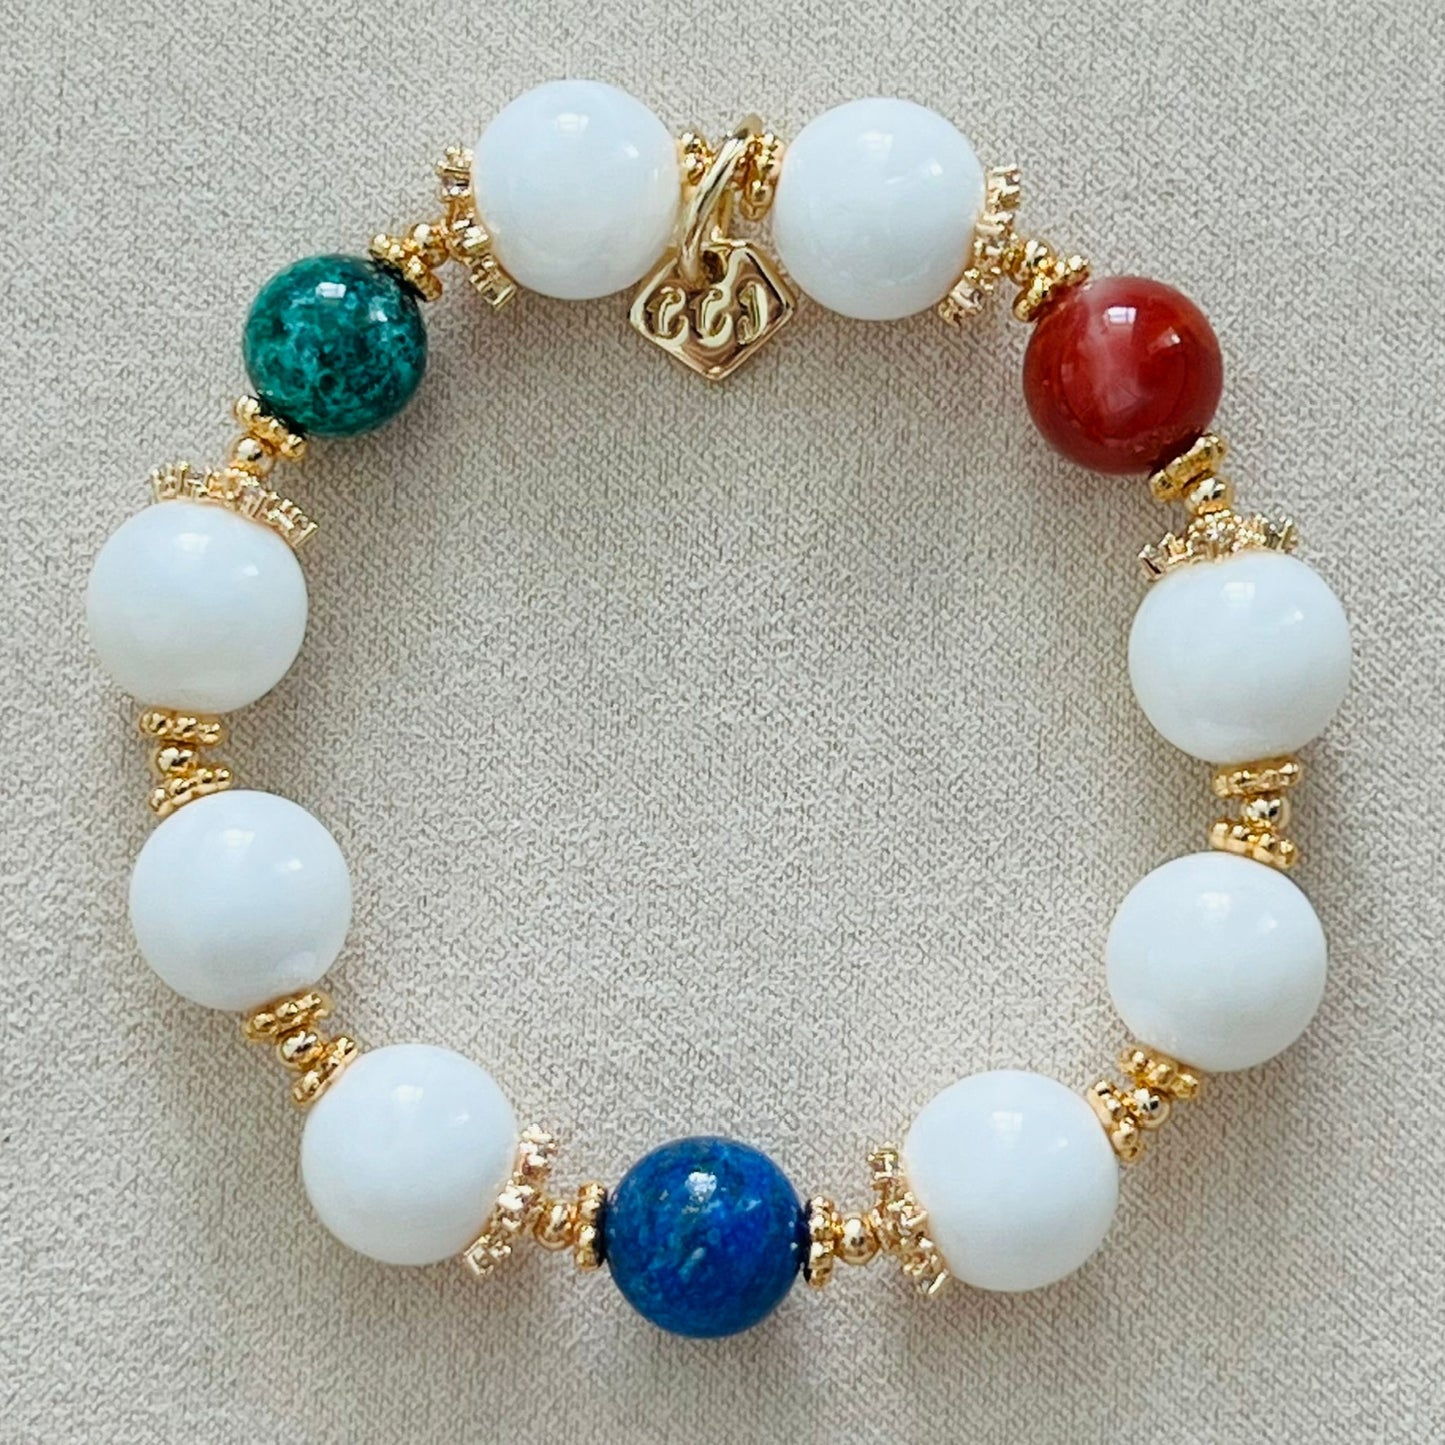 White Coral, Green Turquoise, Lapis Lazuli & Red Agate Bracelet